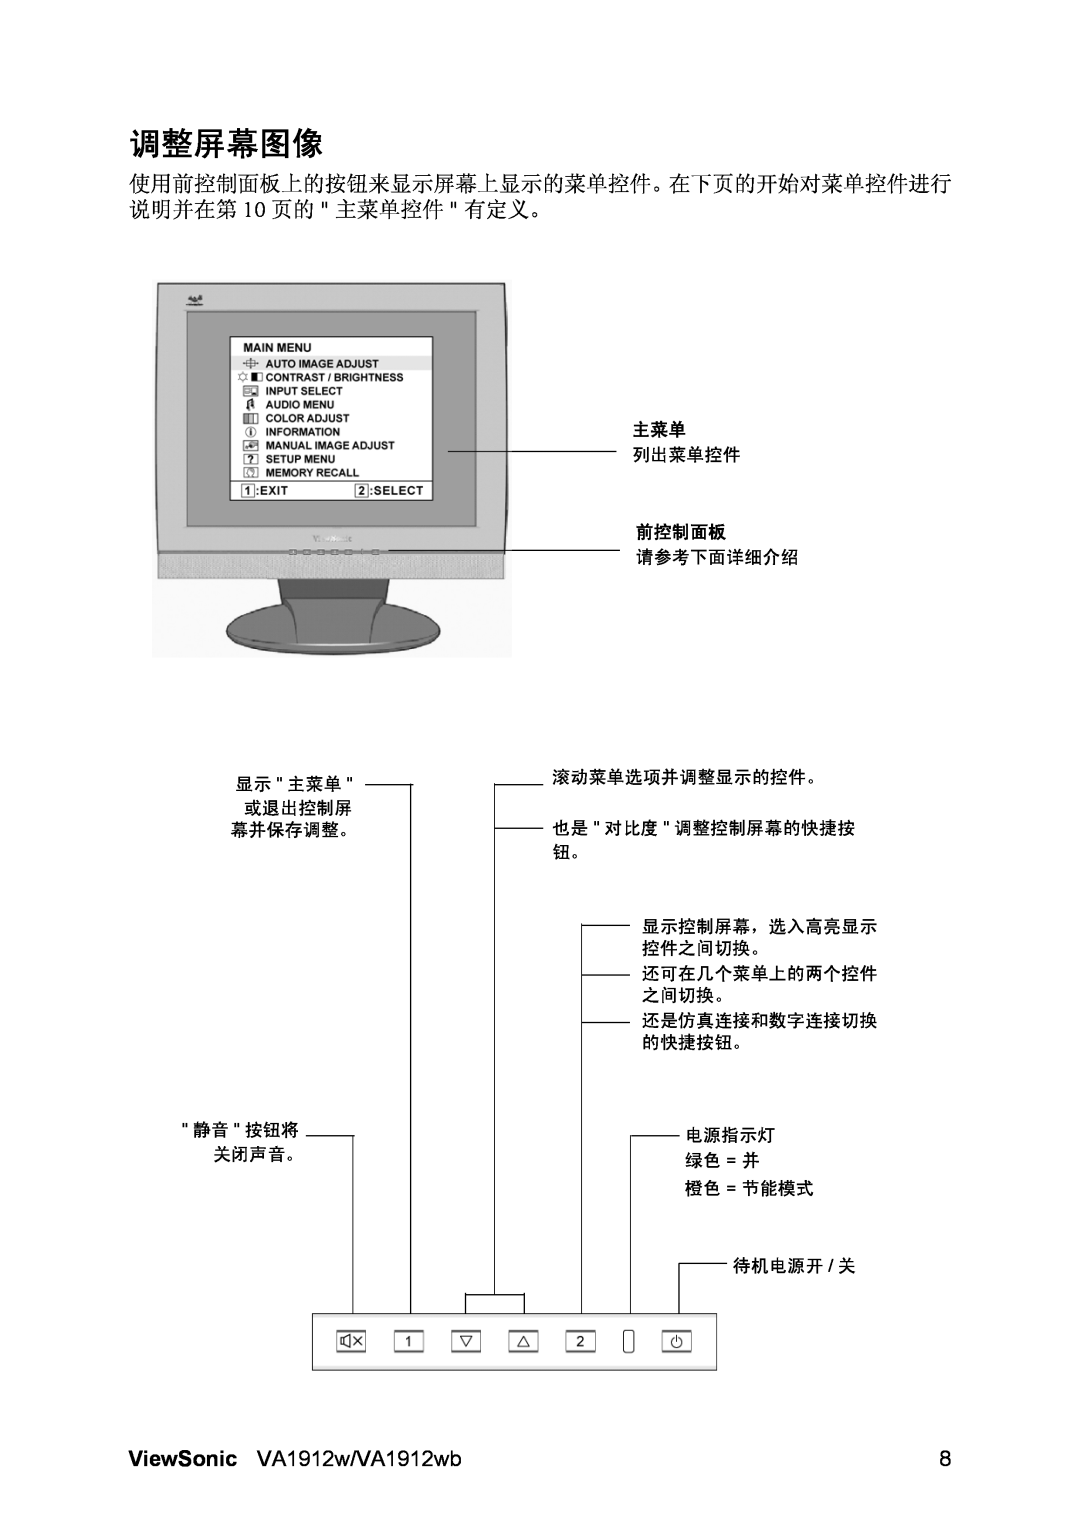 ViewSonic VA1912wb-1, VA1912w-1 manual 调整屏幕图像, 使用前控制面板上的按钮来显示屏幕上显示的菜单控件。在下页的开始对菜单控件进行 说明并在第 10 页的 主菜单控件 有定义。 